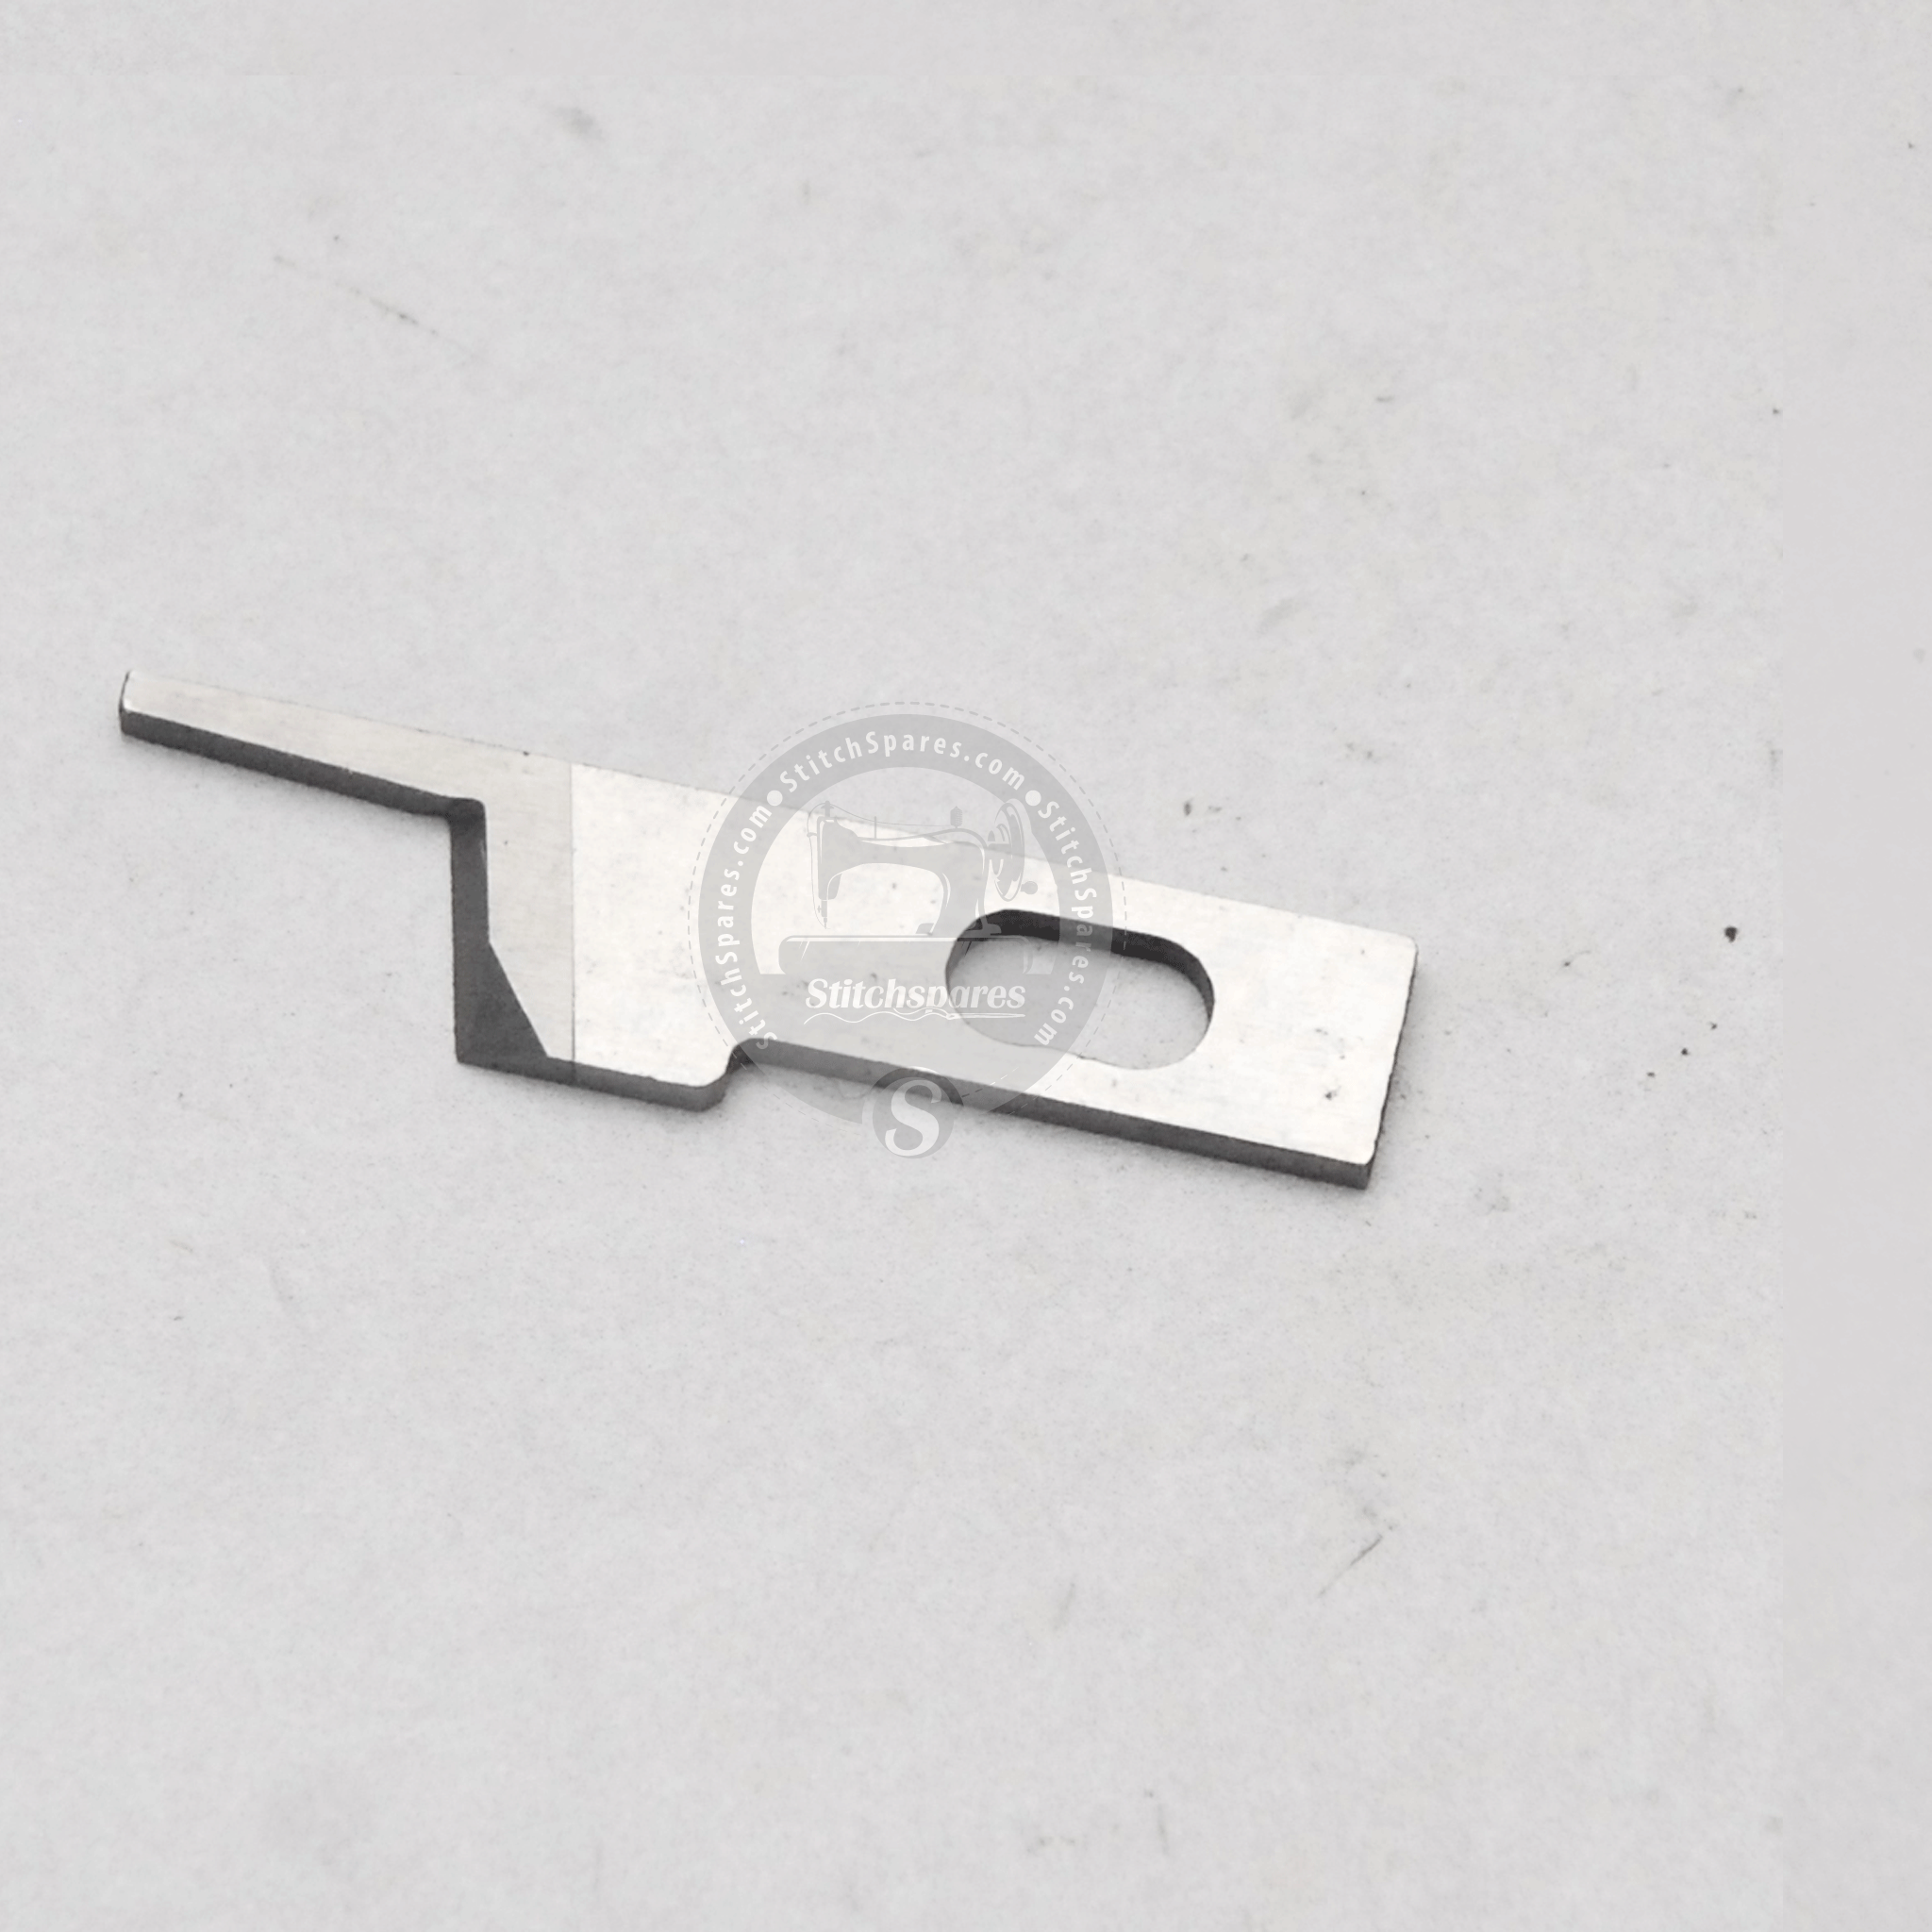 277000-F Linkes Seitenmesser/Klinge (Reverse-Typ-Messer) Linkes Overlock-Nähmaschinen-Ersatzteil